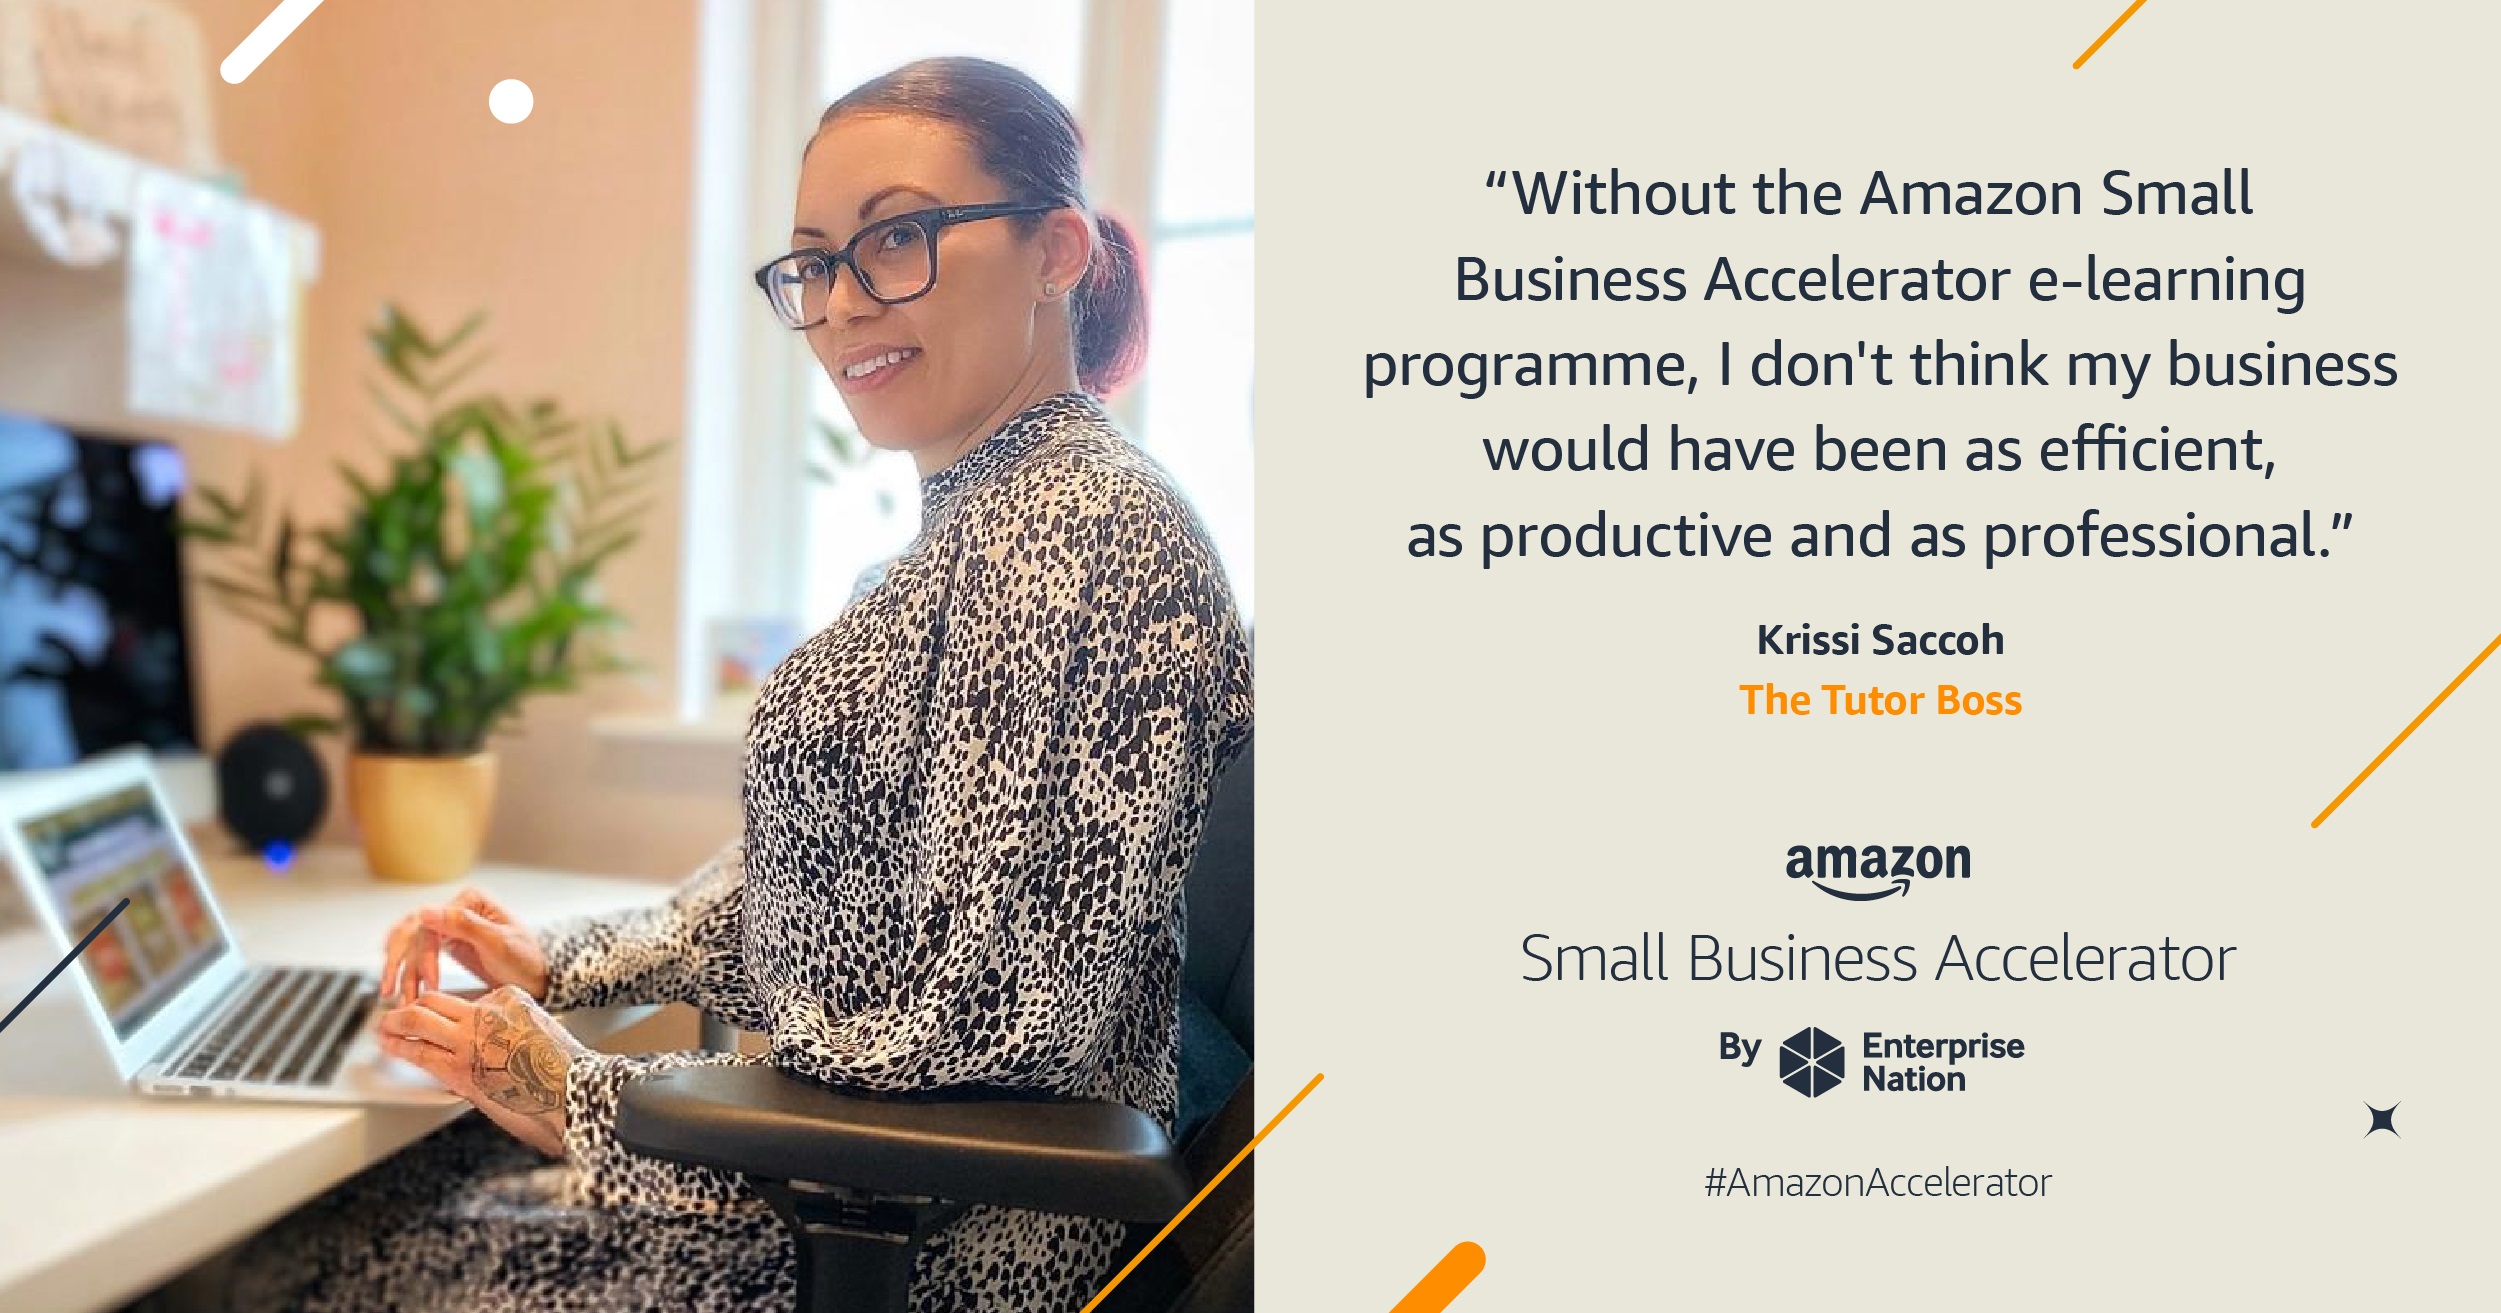 Krissi Saccoh, The Tutor Boss - Amazon Small Business Accelerator